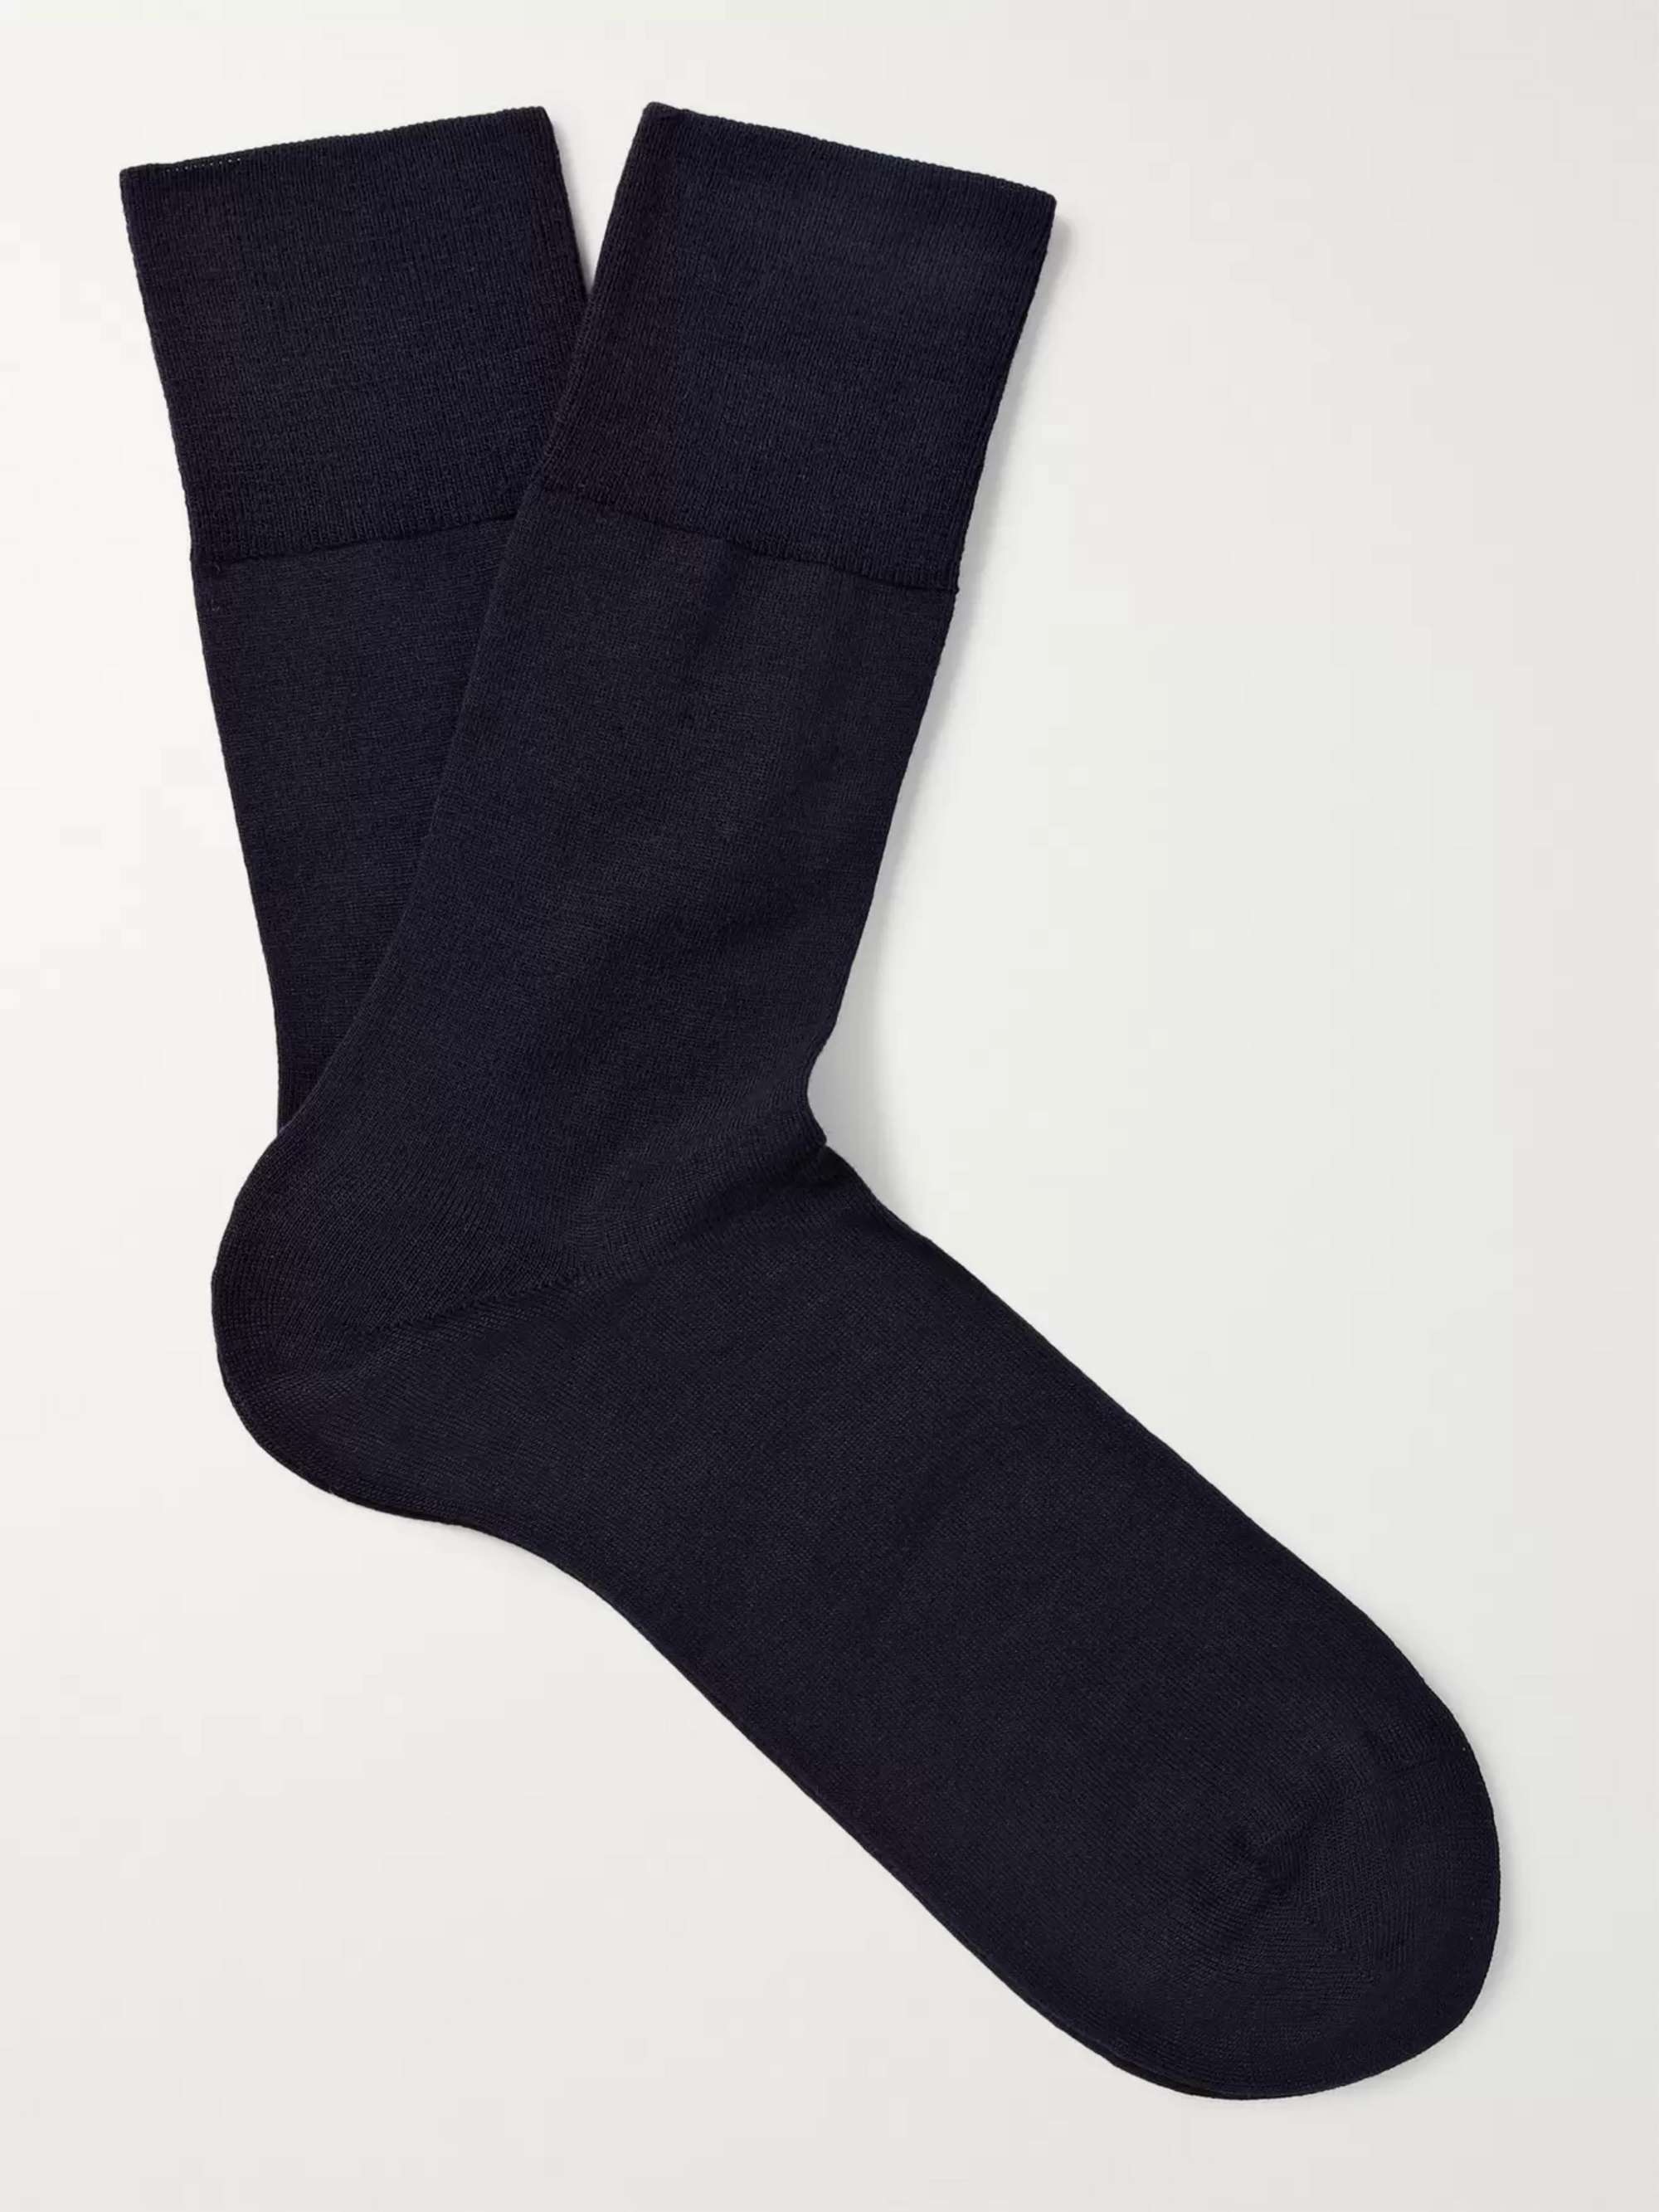 FALKE Airport Wool and Cotton-Blend Socks | MR PORTER